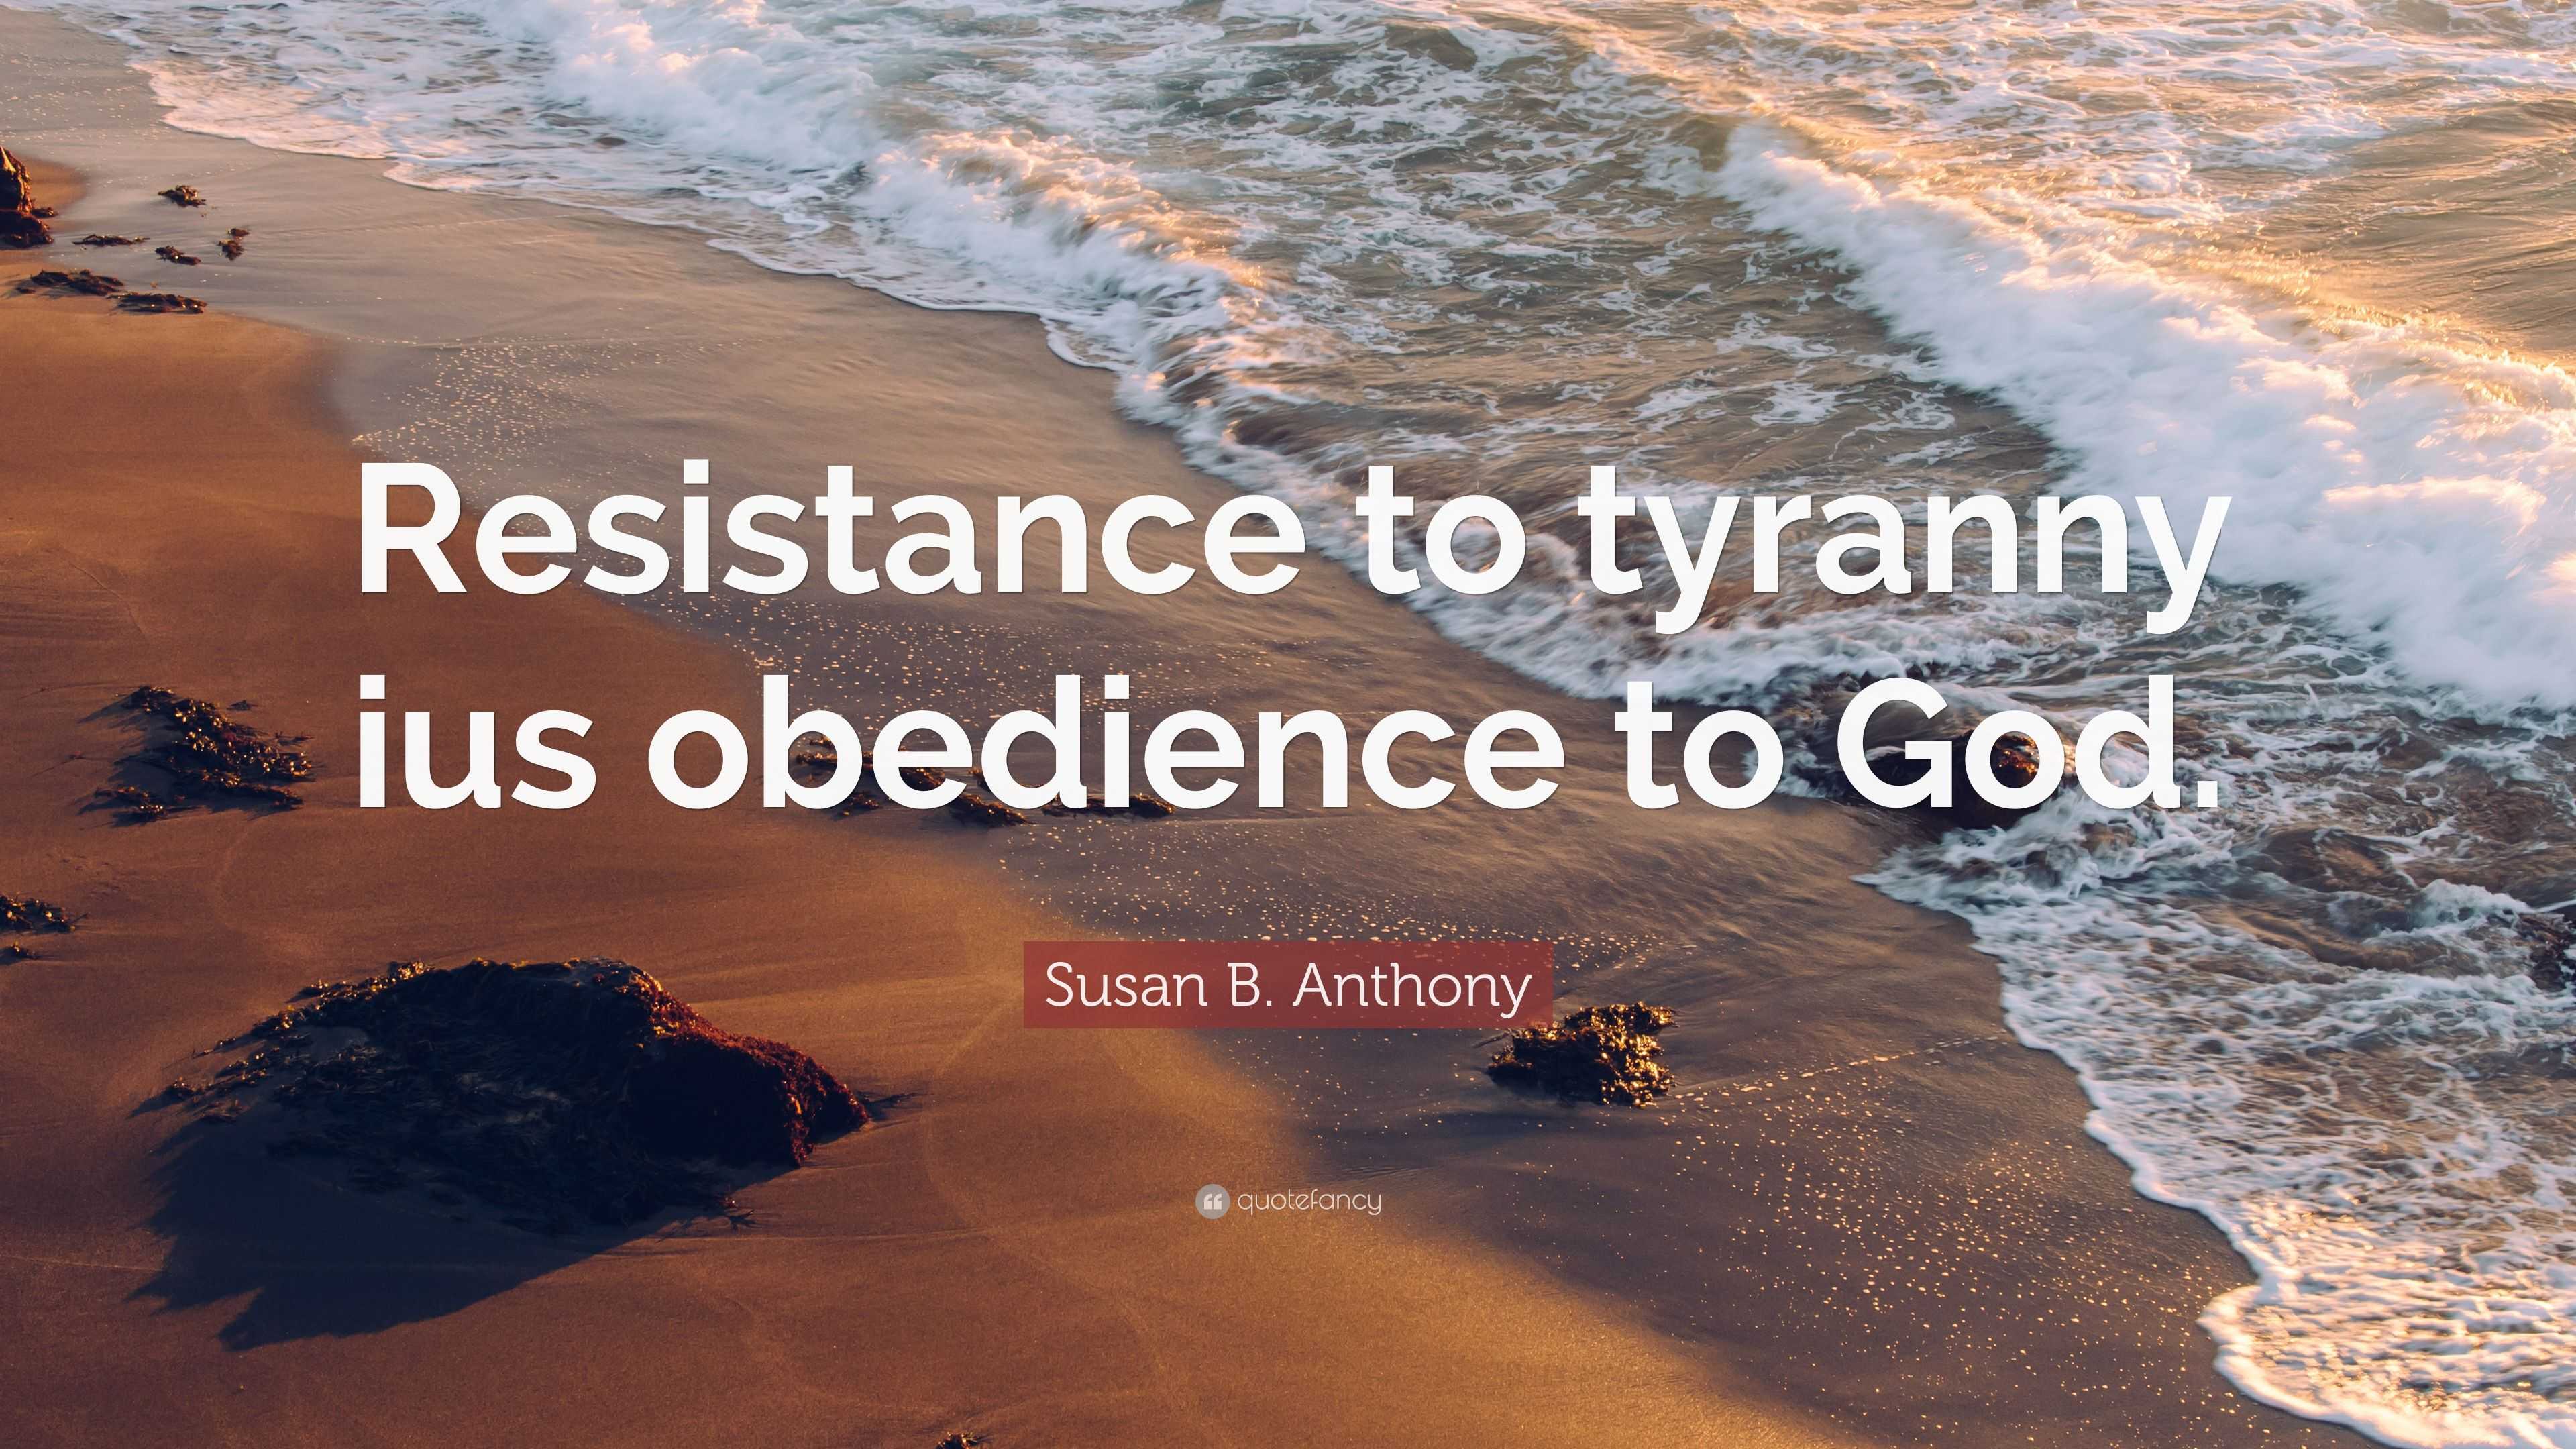 Susan B. Anthony Quote: "Resistance to tyranny ius ...